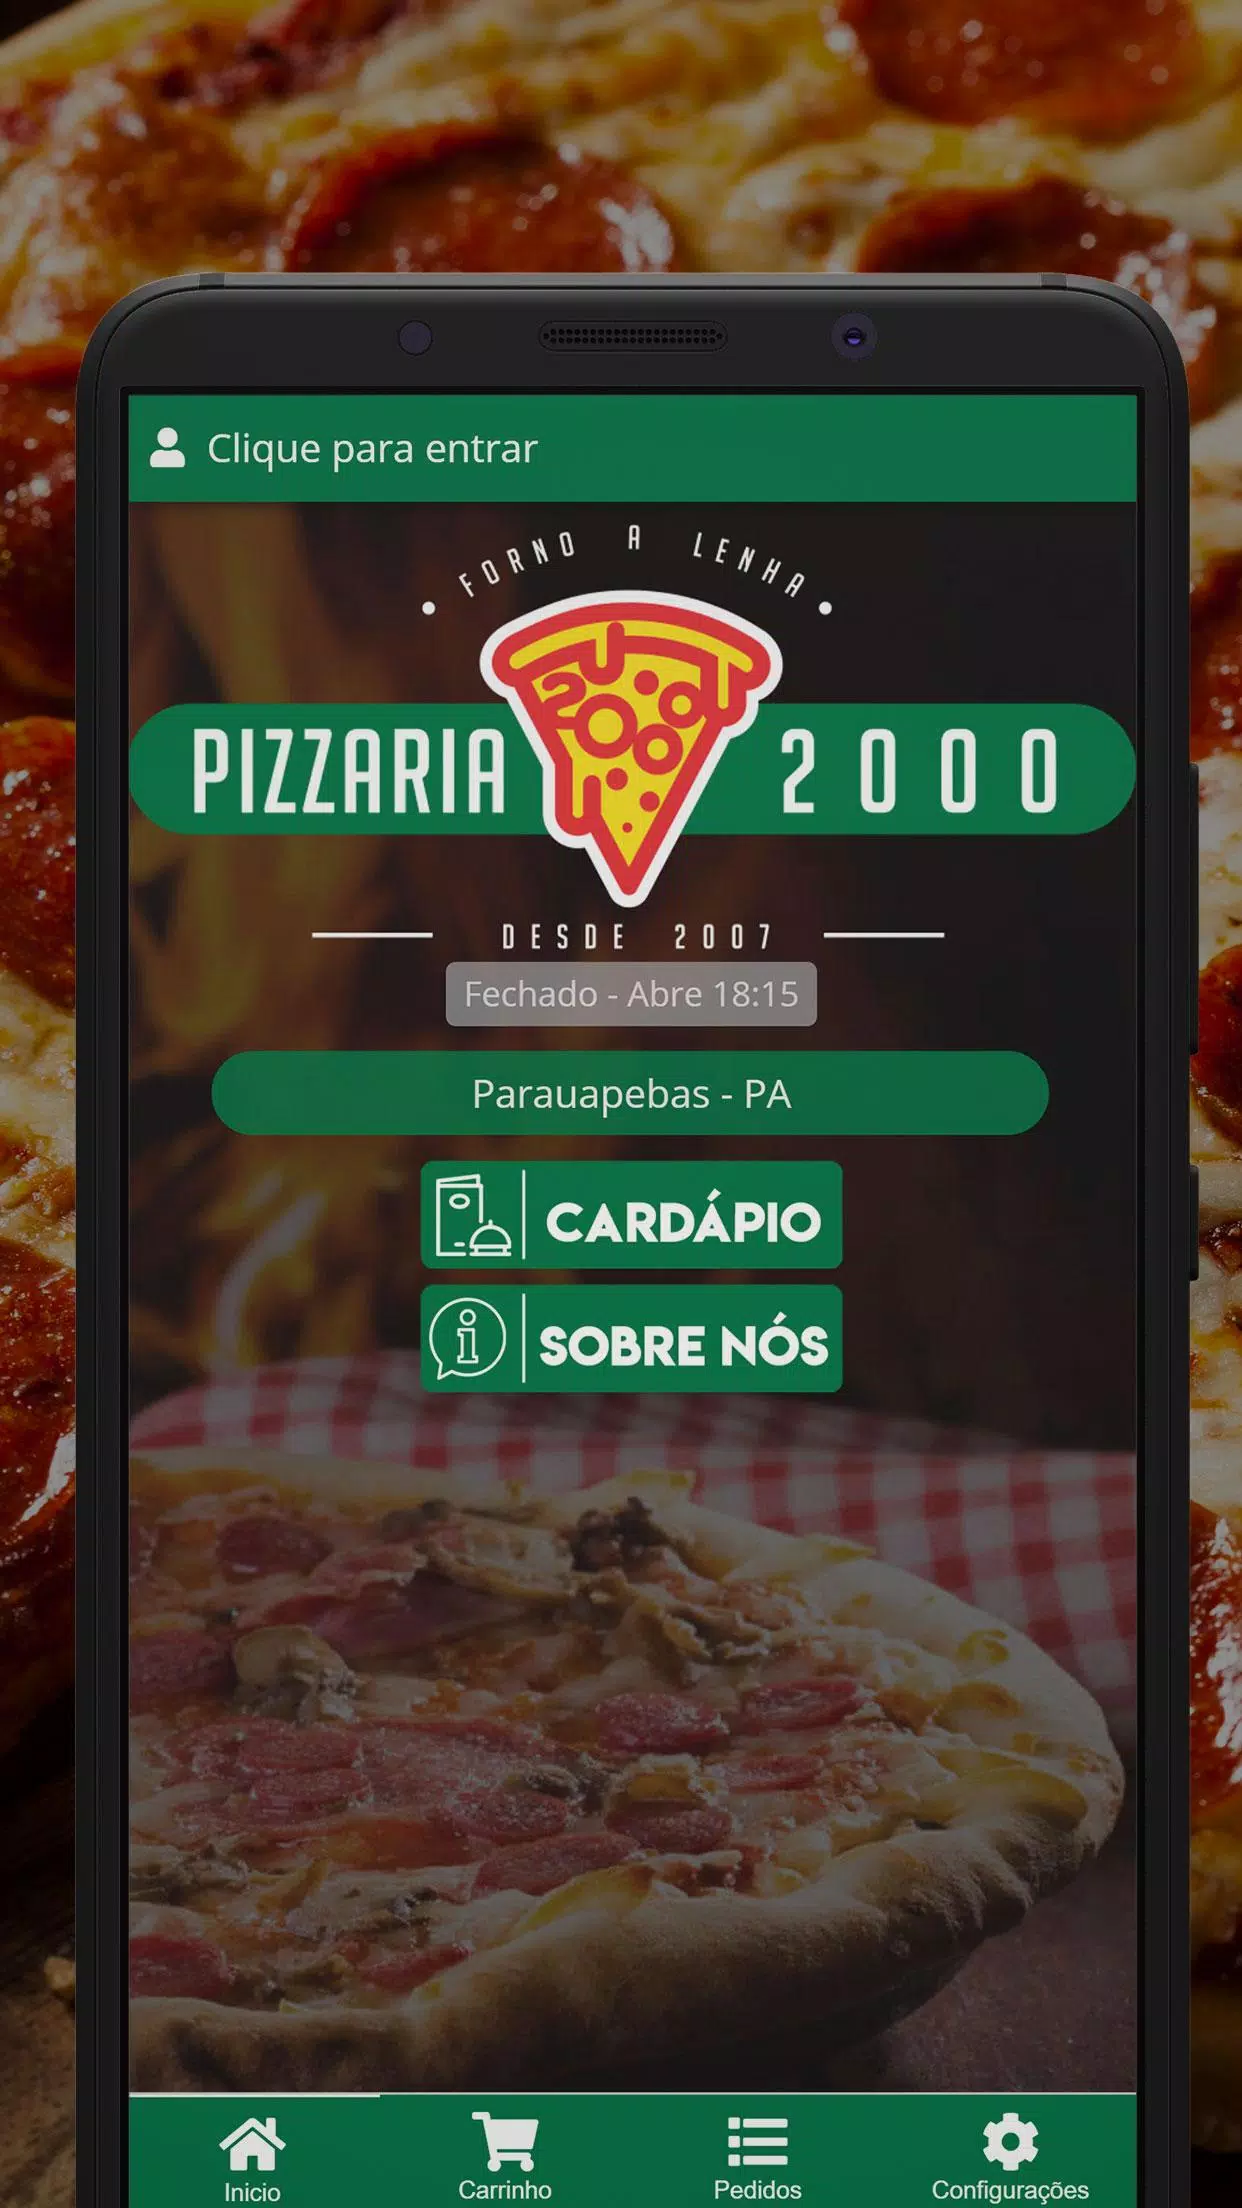 Download do APK de Pizzaria Forno Caipira para Android